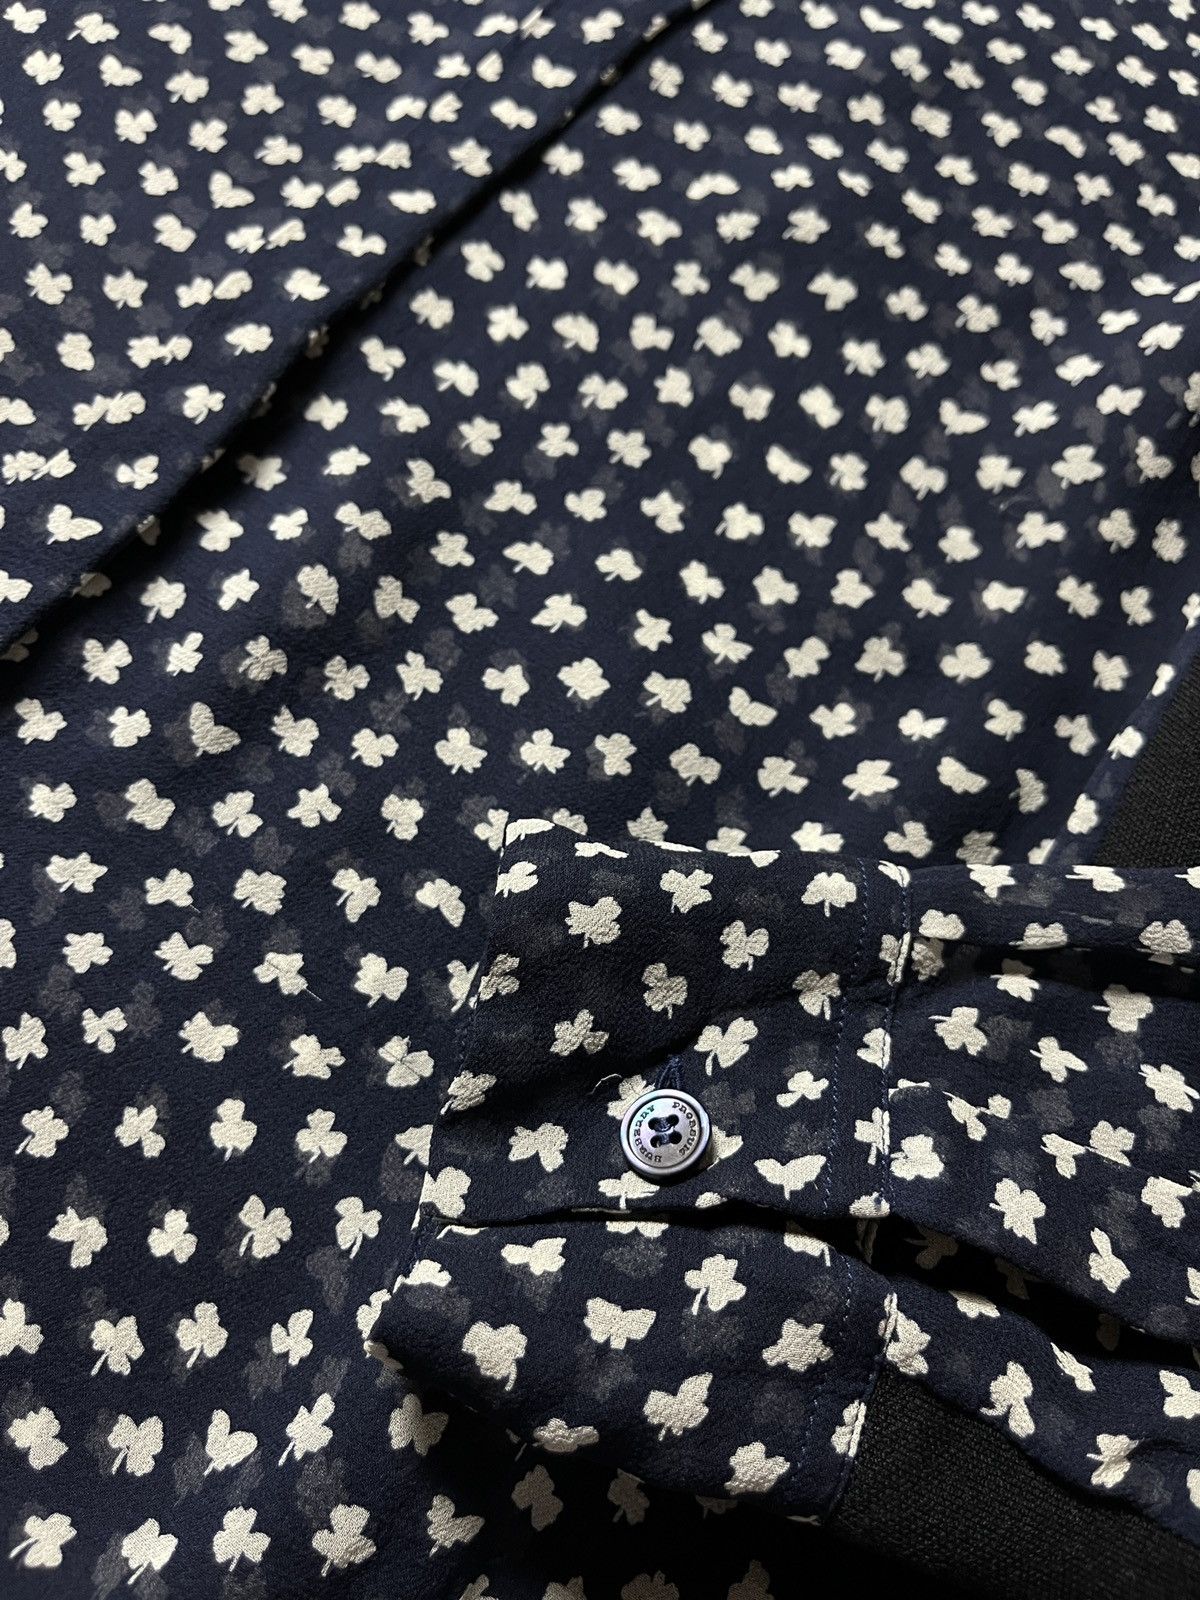 Burberry Prorsum Burberry Prorsum Black Label Floral Print Silk Shirt In Navy Size M / US 6-8 / IT 42-44 - 5 Thumbnail